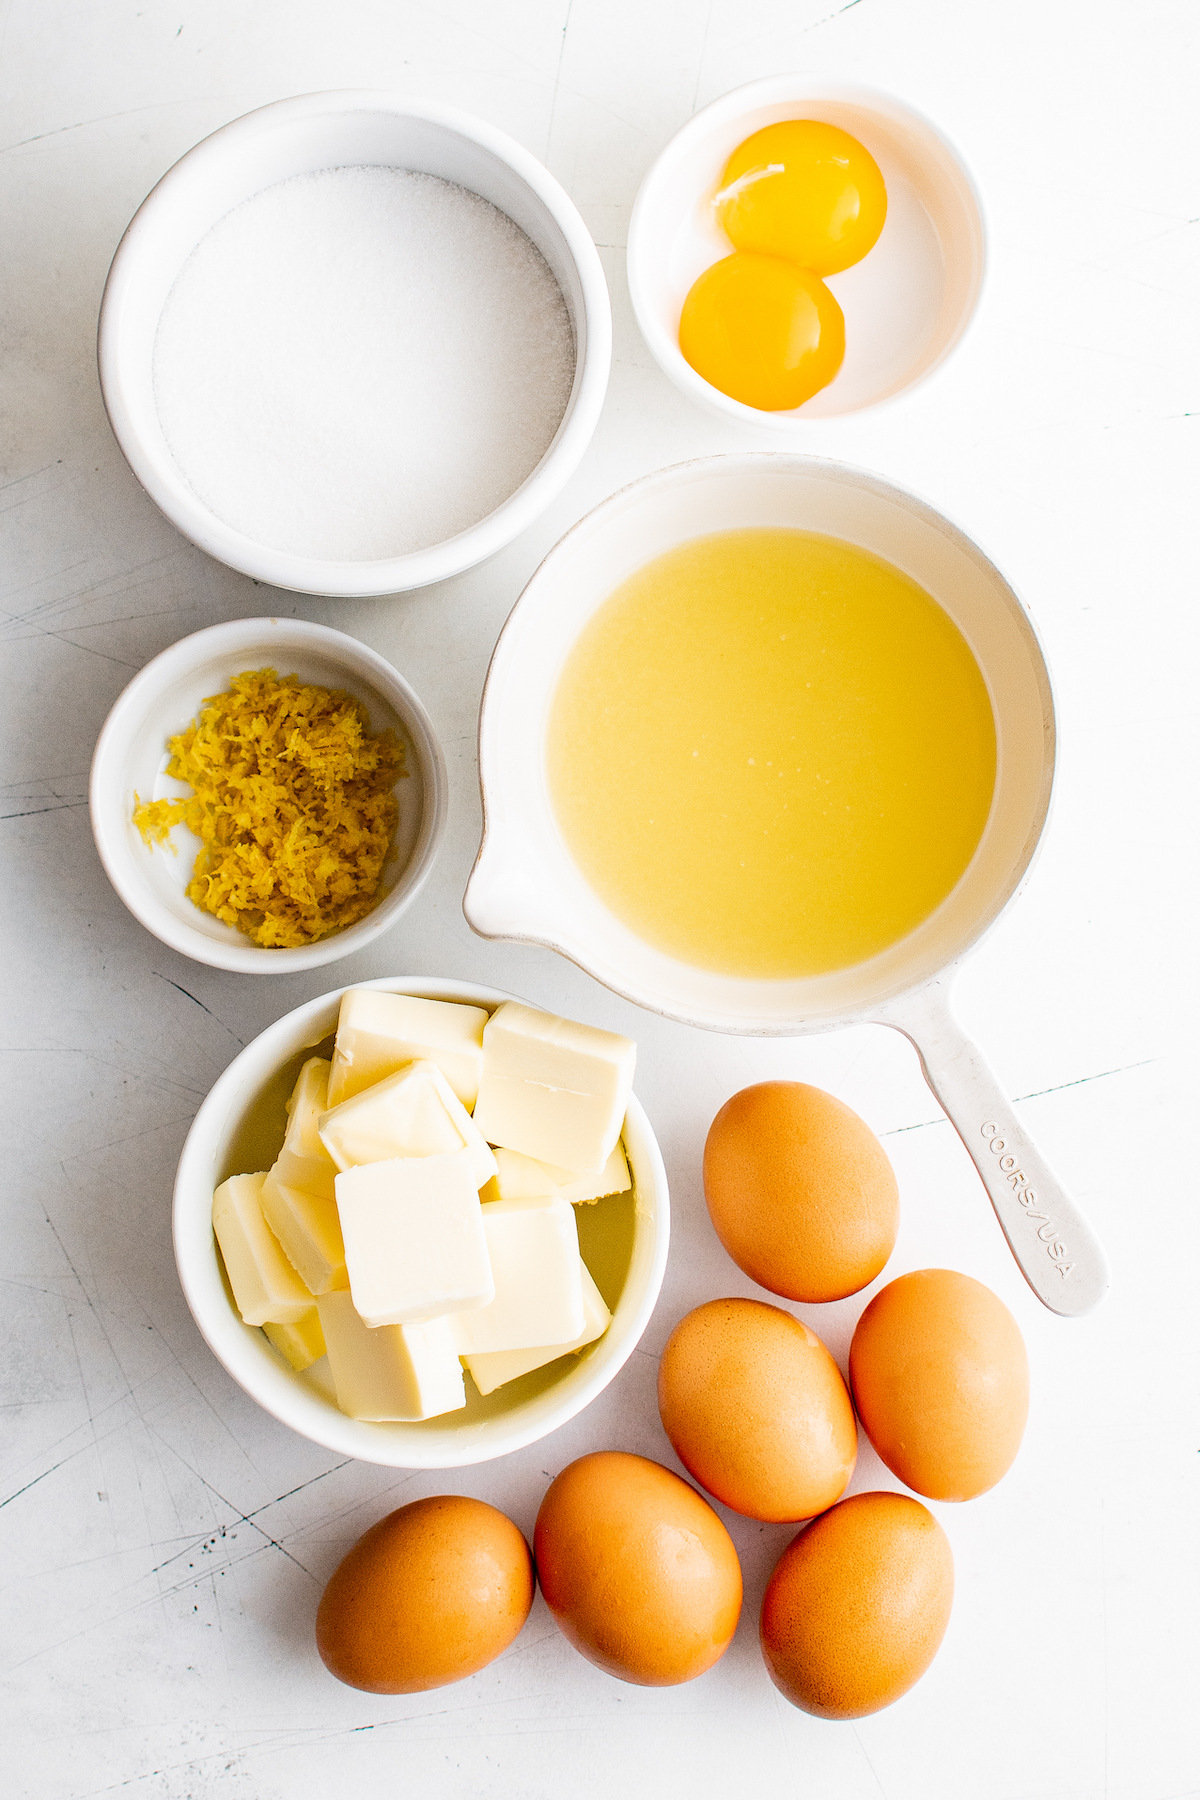 From top: Sugar, egg yolks, graham cracker crumbs, lemon juice, butter, eggs.